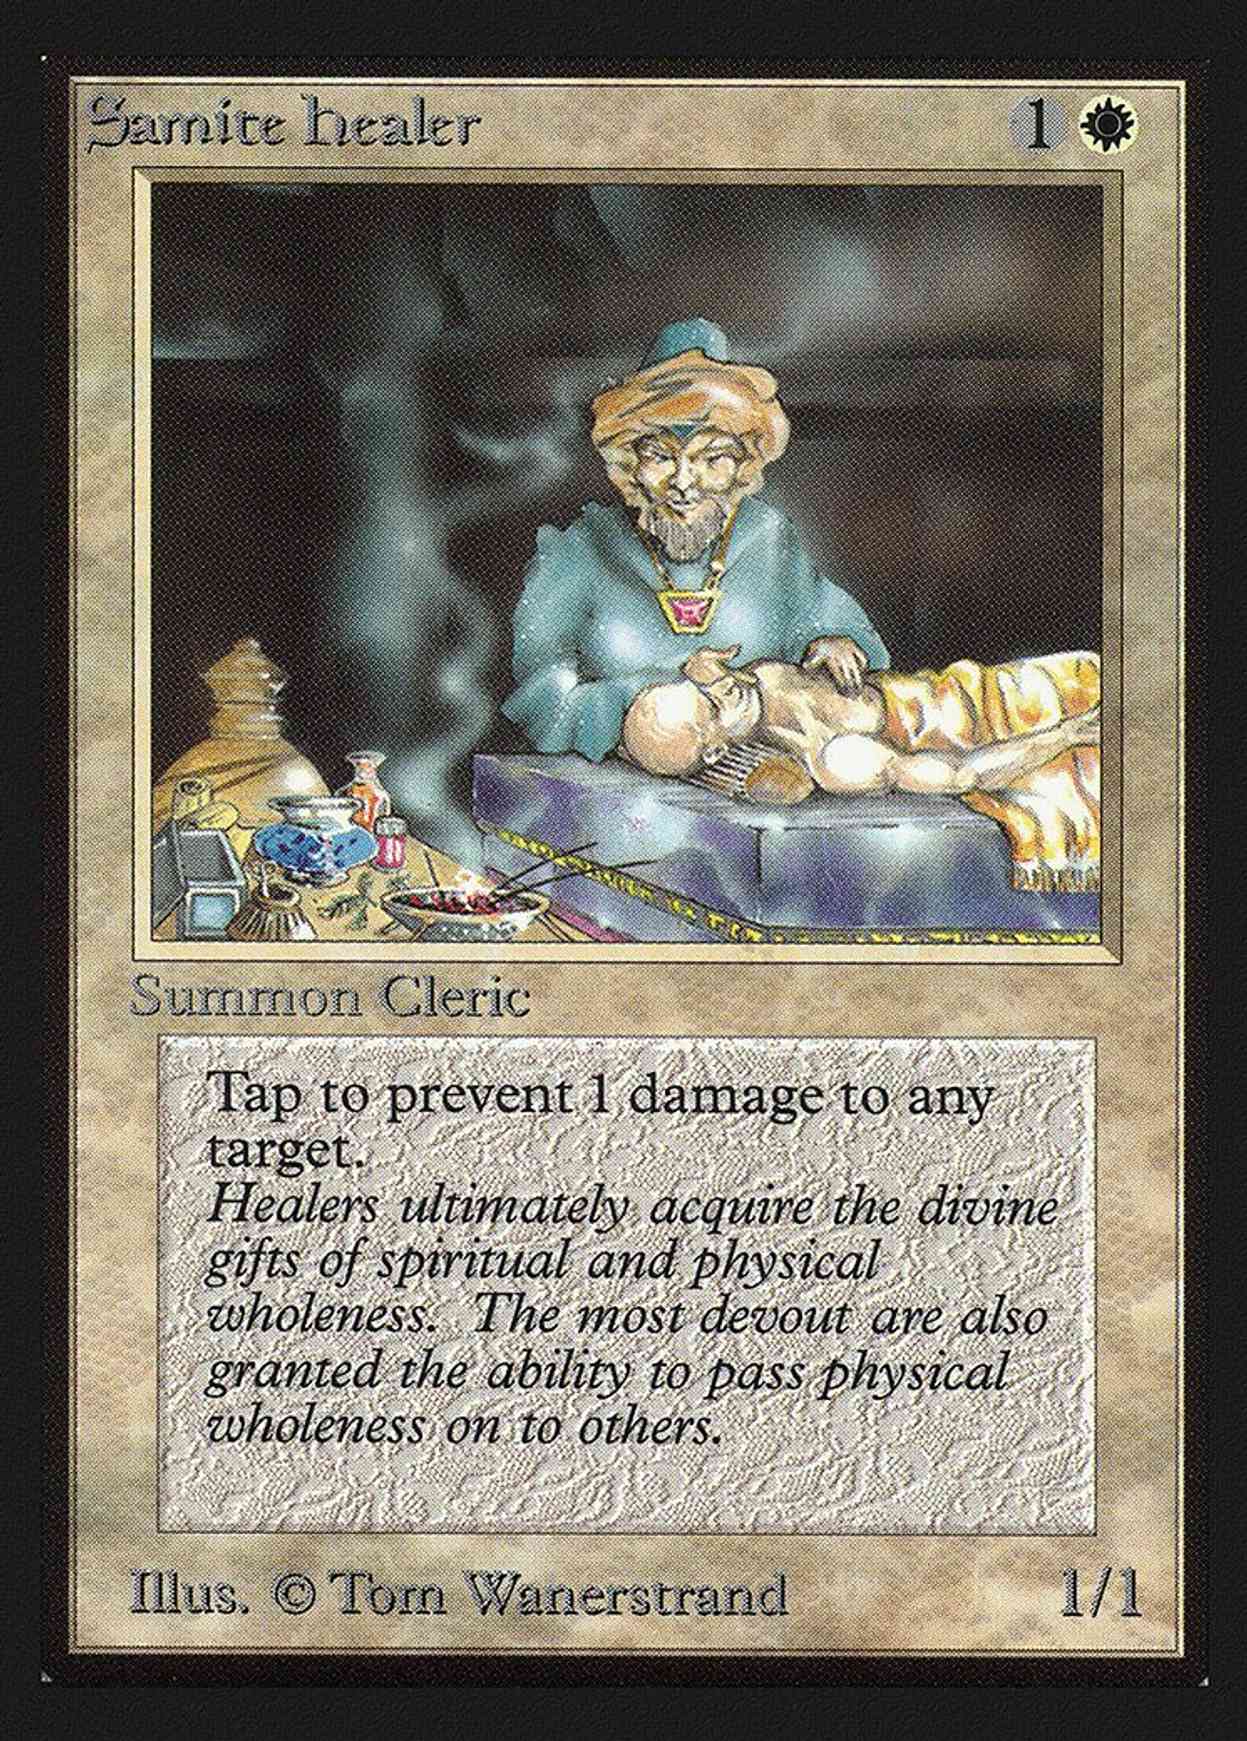 Samite Healer (CE) magic card front